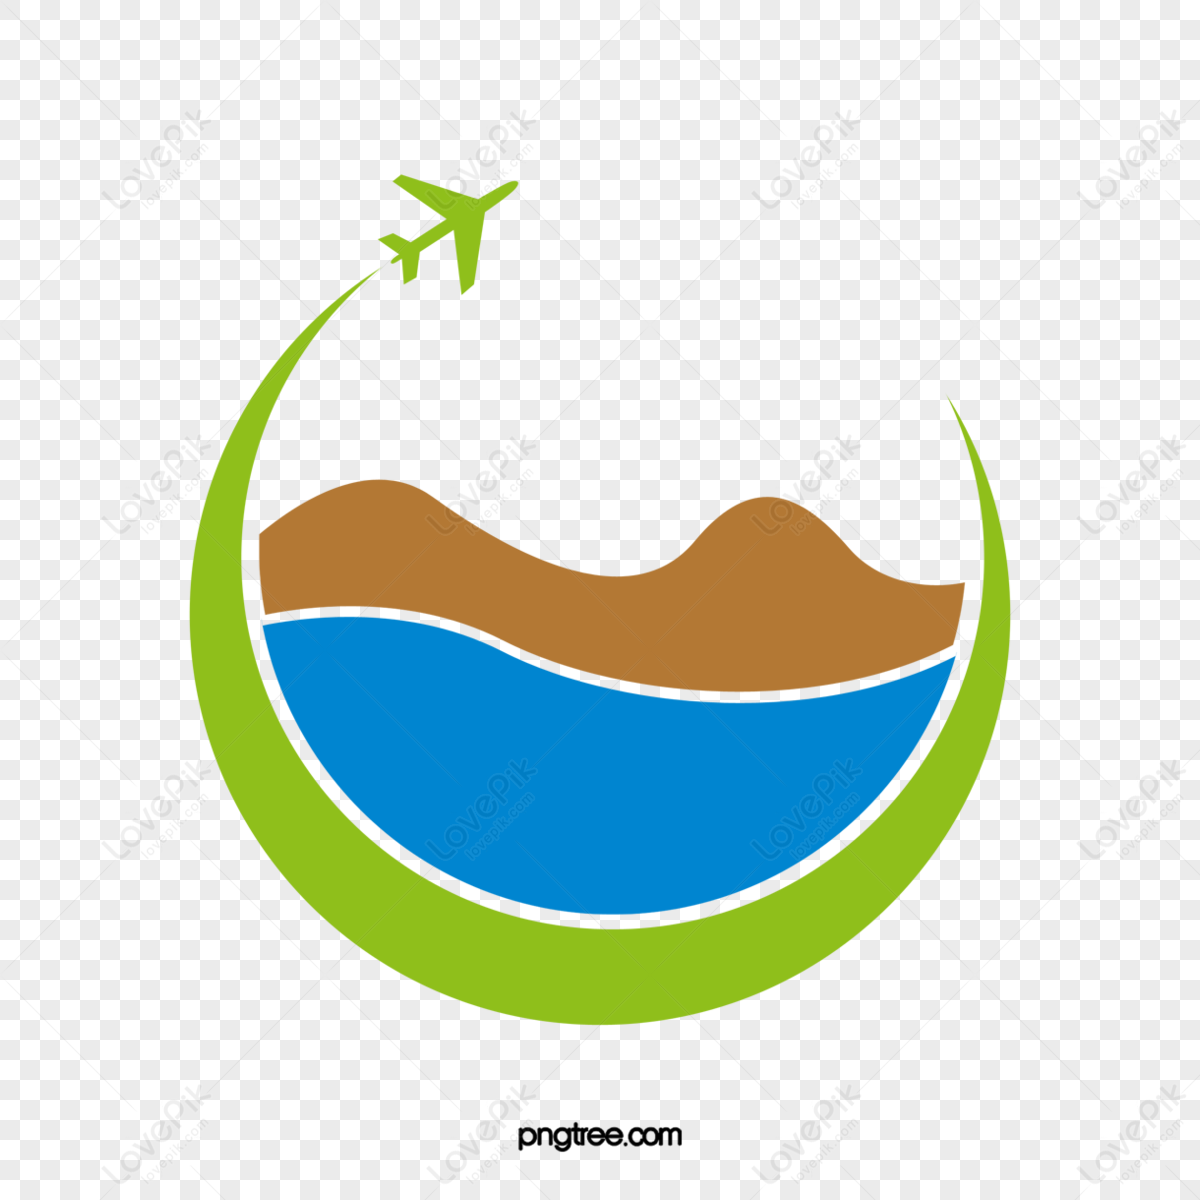 travel logo design free logo design template,navigation,tourism png transparent image